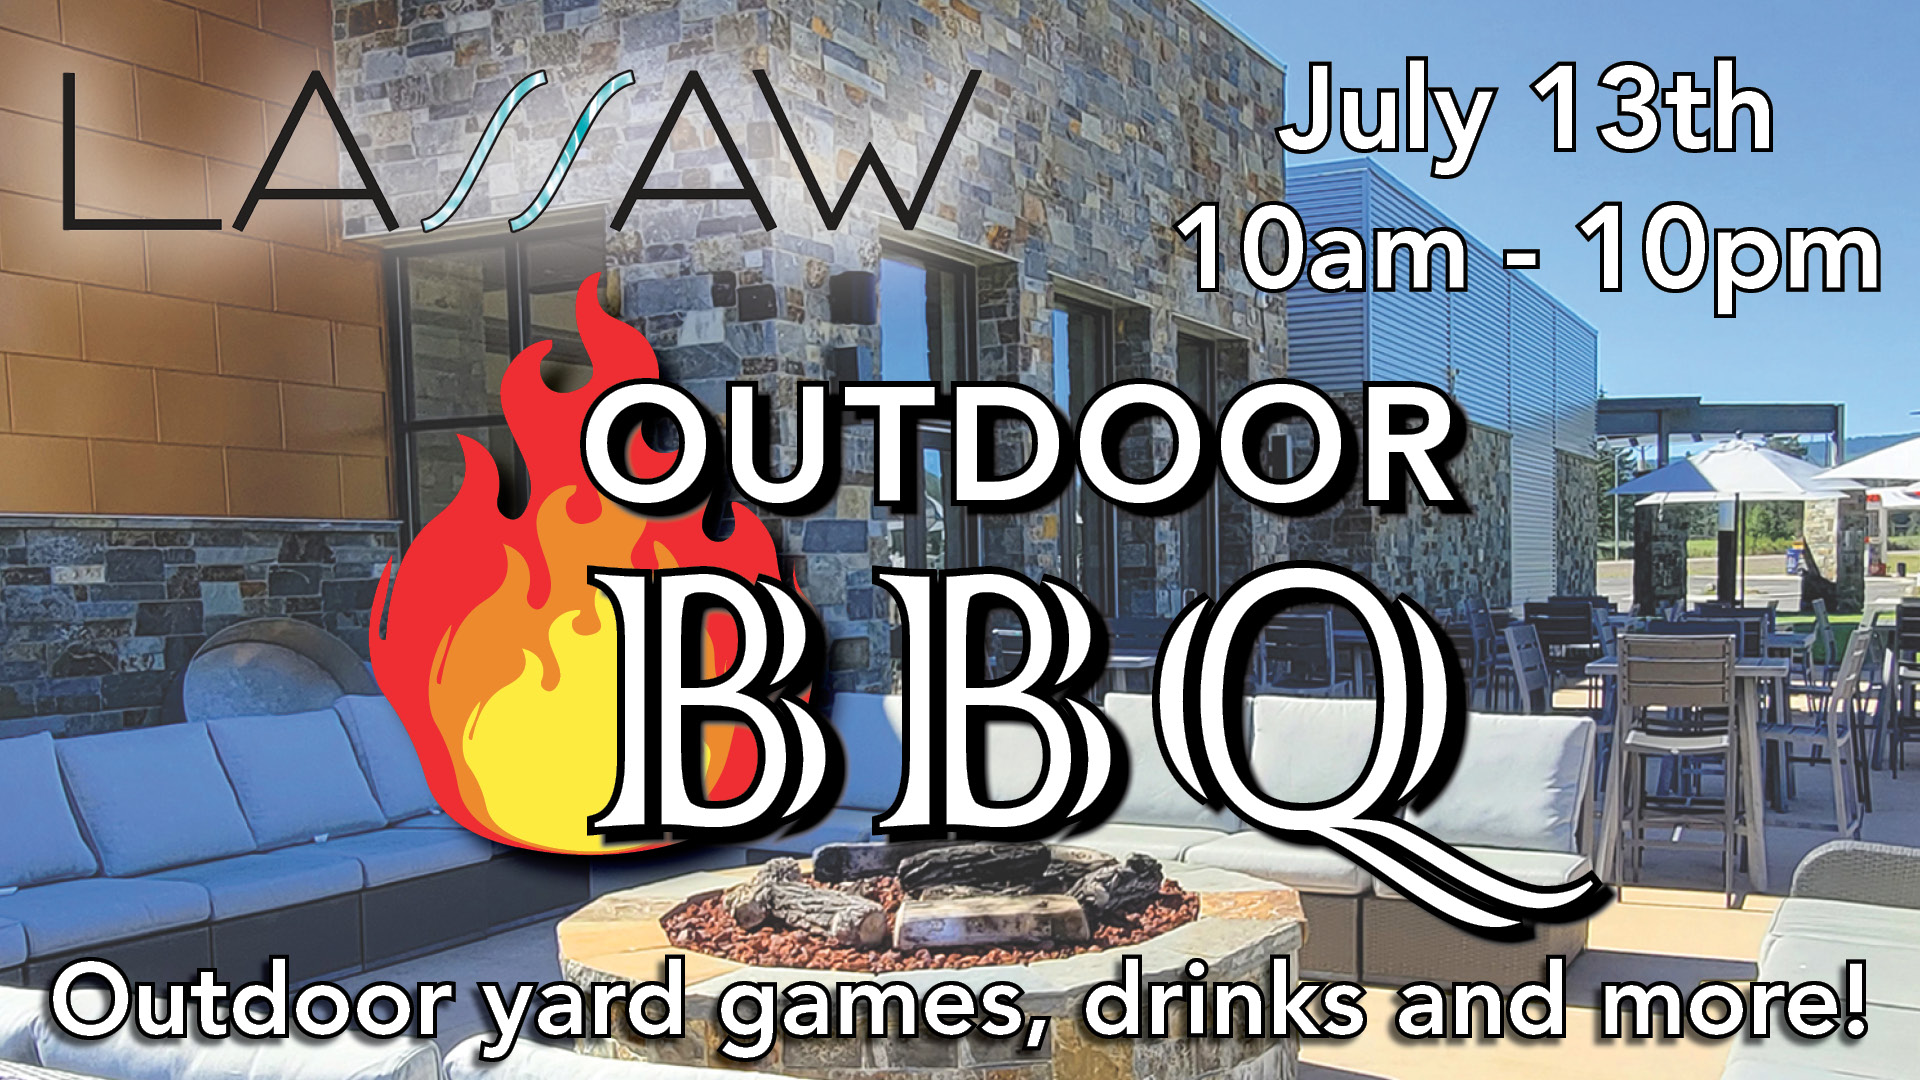 Lassaw, Lassaw Sports Bar, Gray Wolf BBQ, outdoor games, drinks, Lassaw BBQ